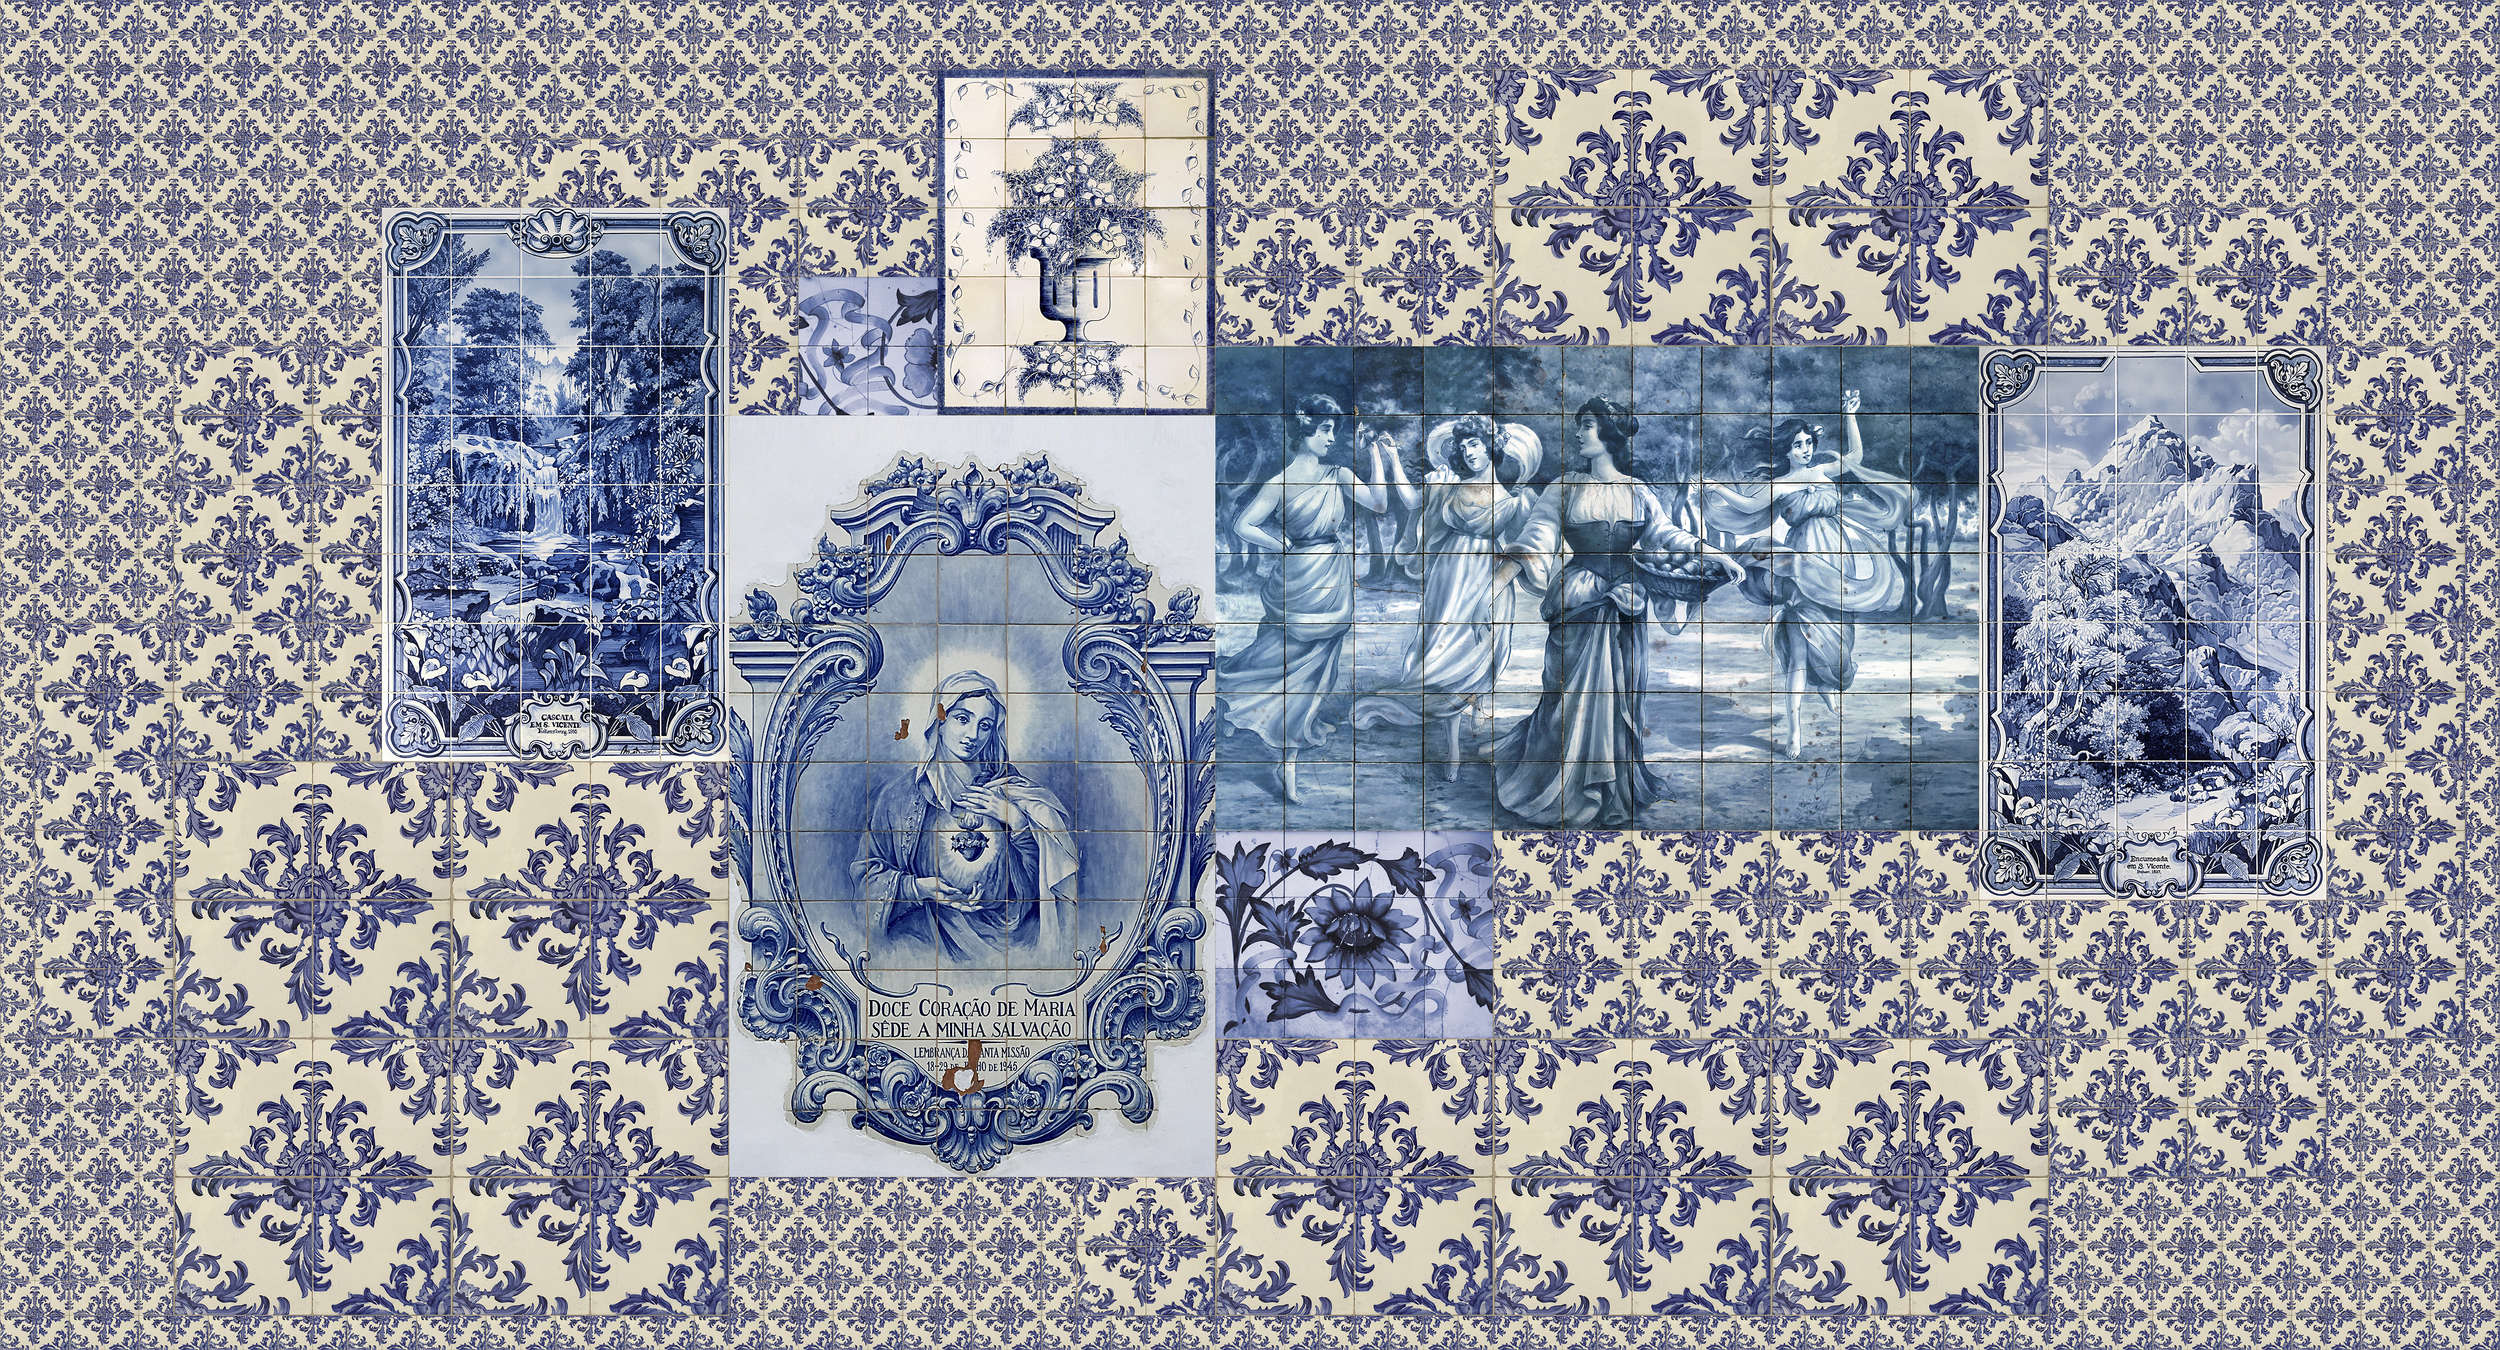             Azulejos 1 - Piastrelle di carta da parati in stile retrò - Beige, Blu | Madreperla in pile liscio
        